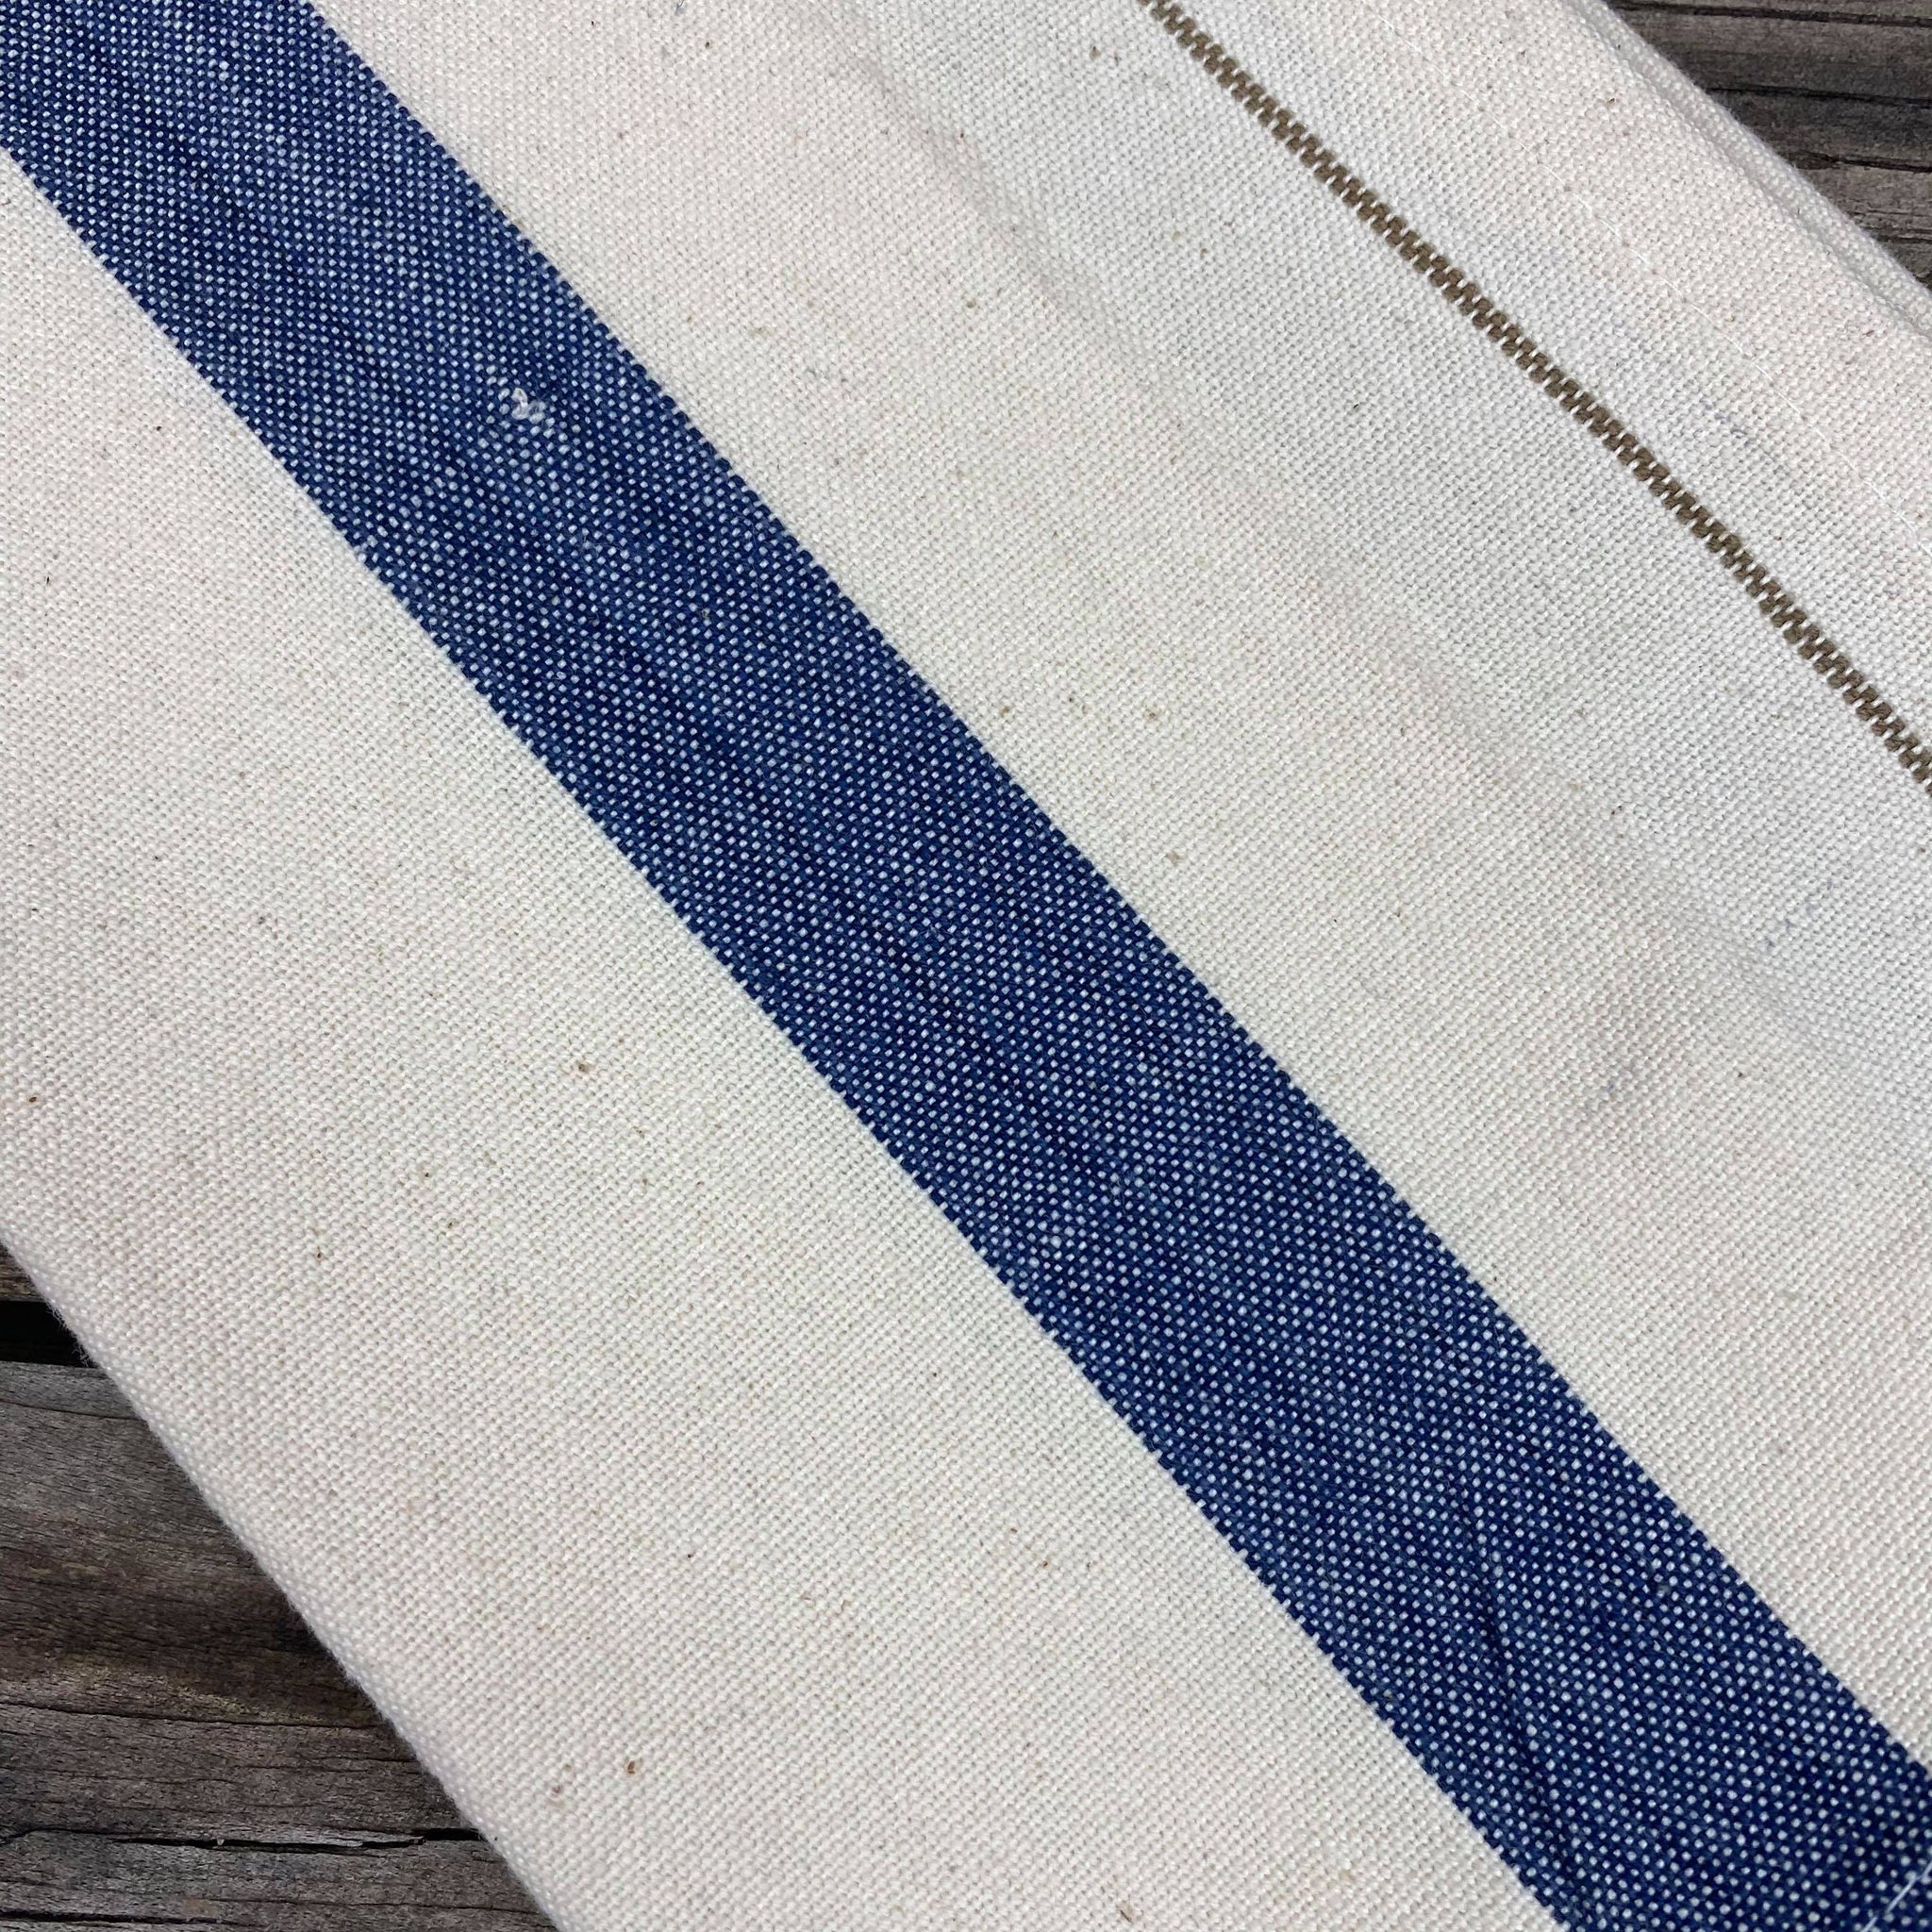 Fair Trade Handwoven Cotton Striped Designs Tea Towels